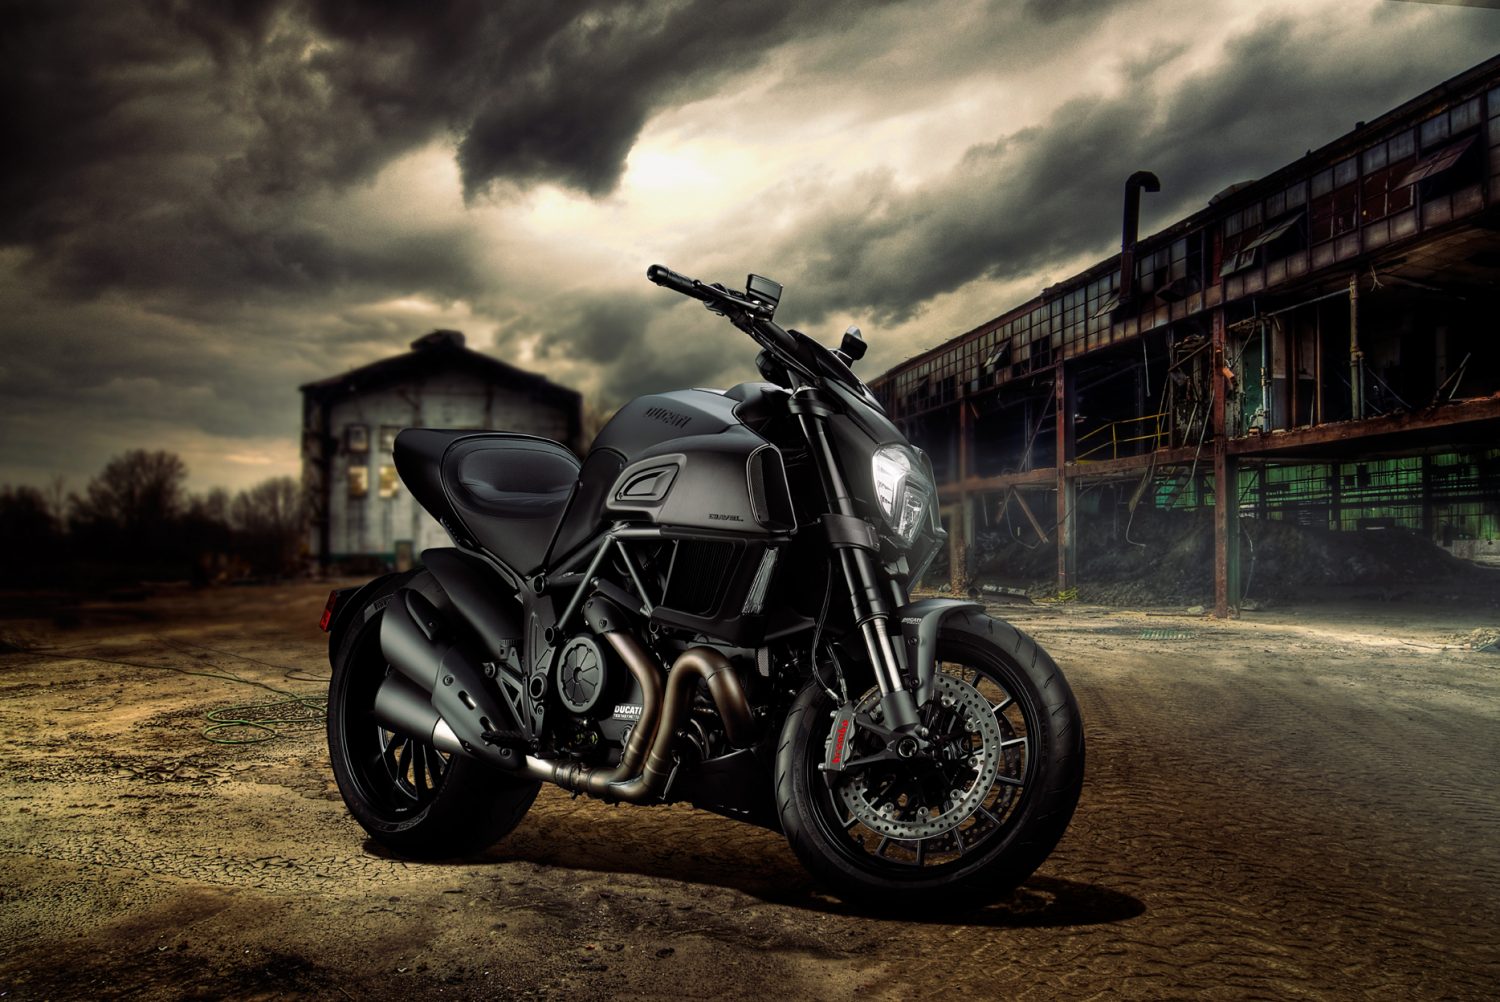 Black Ducati motorcycle in industrial location with dark stormy night sky behind